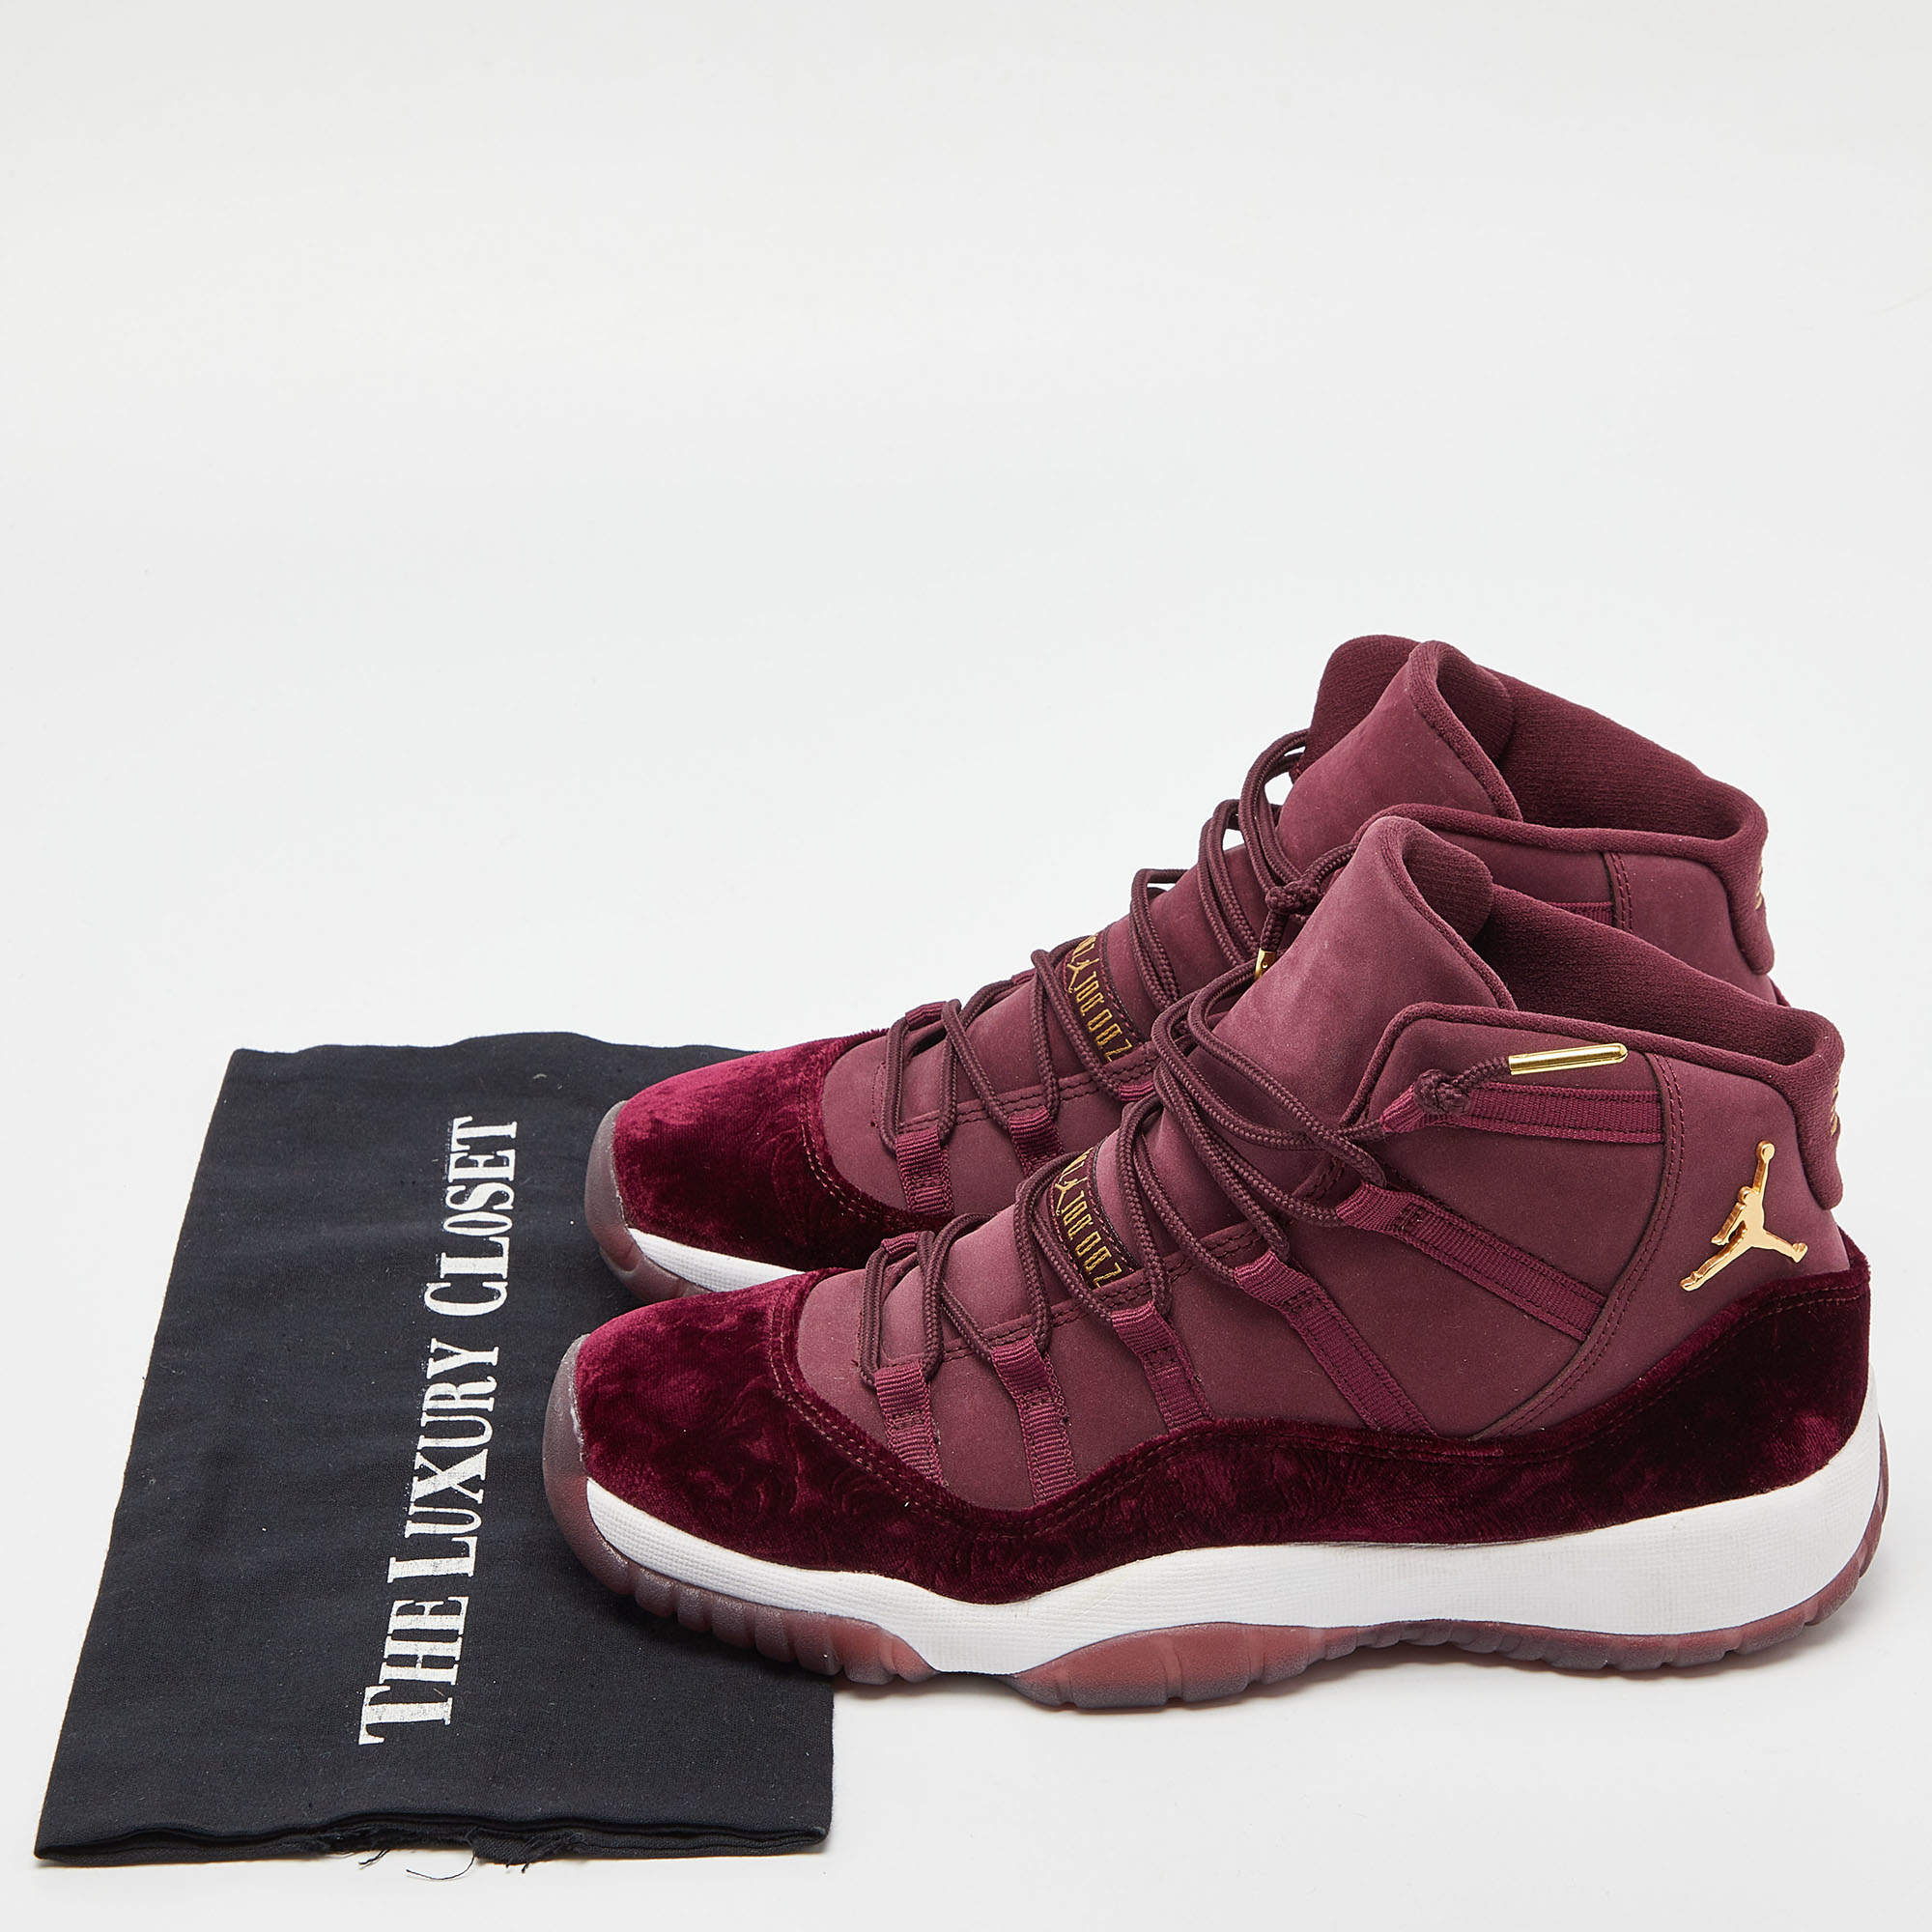 Air Jordan Burgundy Velvet Jordan 11 Retro Heiress Sneakers Size 41 Jordan